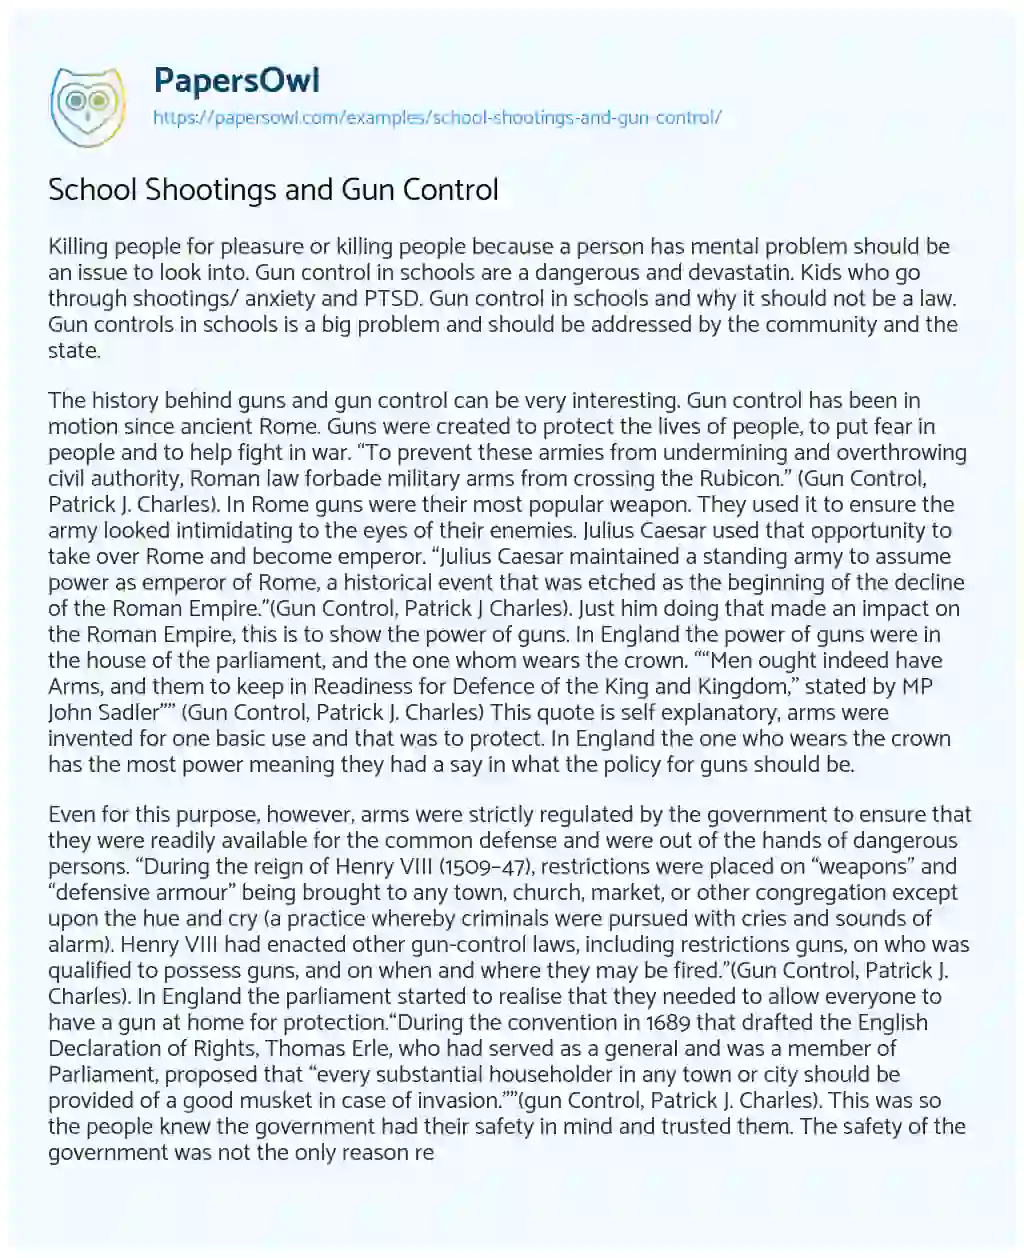 Essay on School Shootings and Gun Control